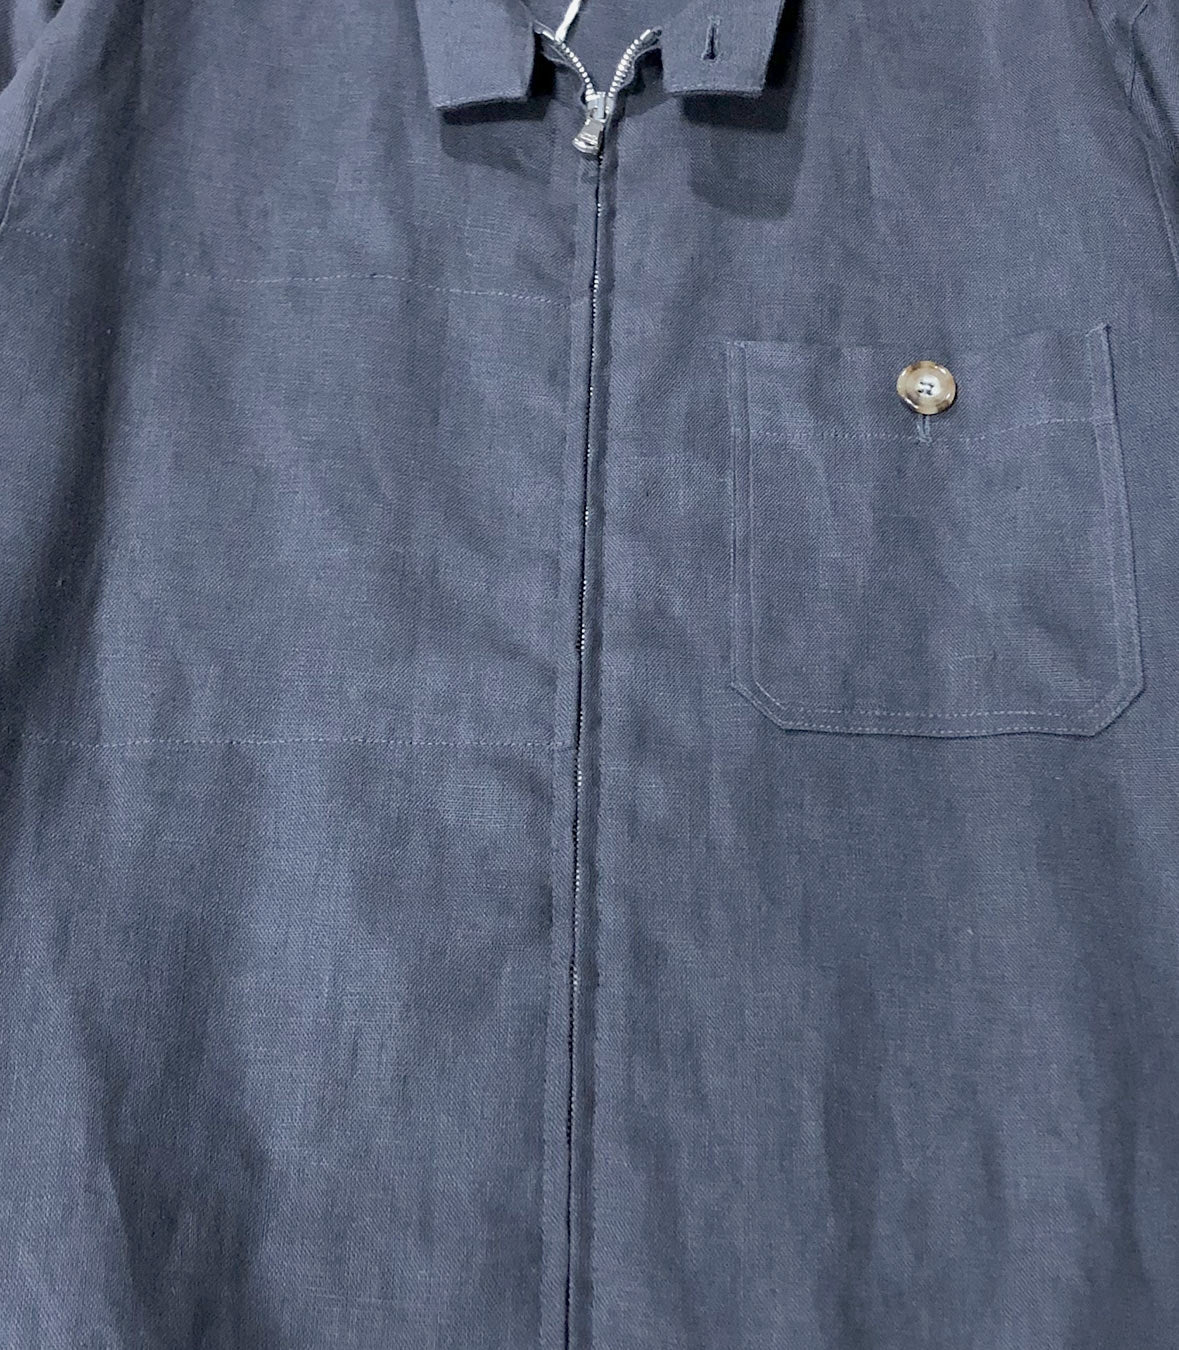 Linen Zip Front Jacket Made in USA | RAMBLERS WAY